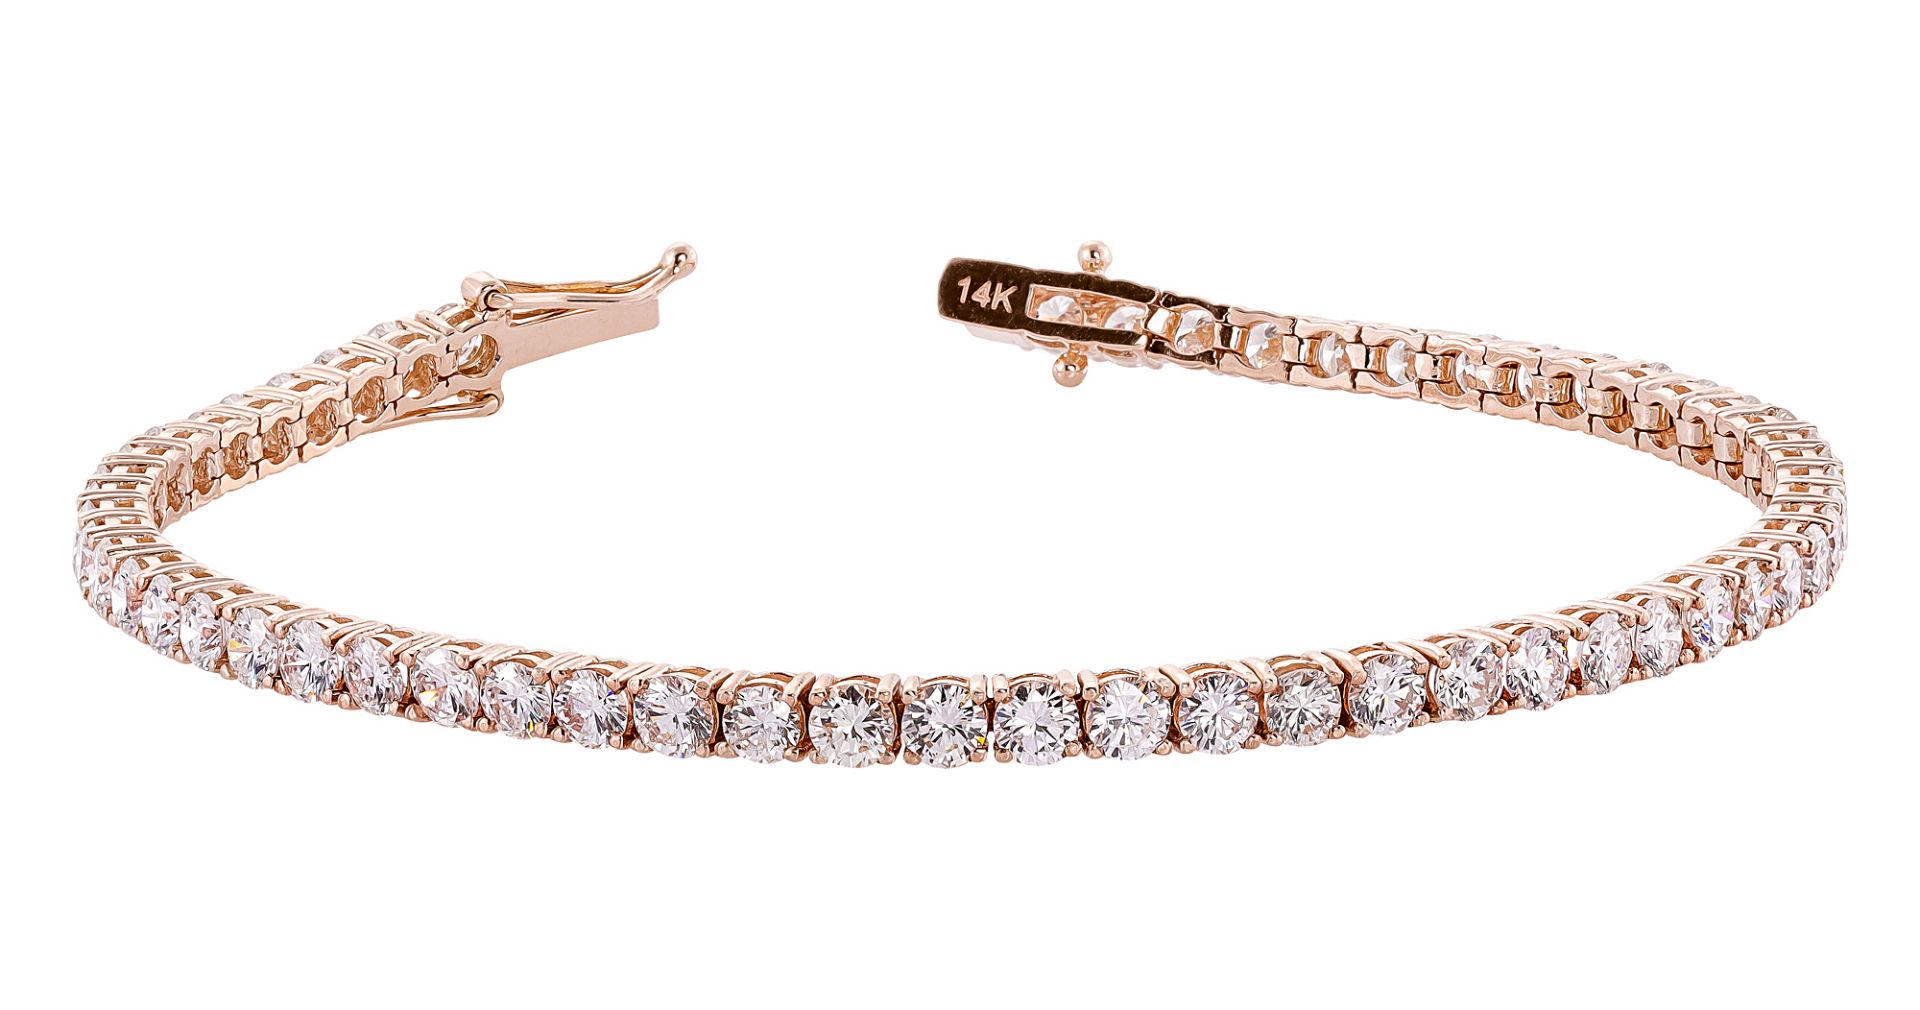 Rose gold alliance bracelet with diamonds